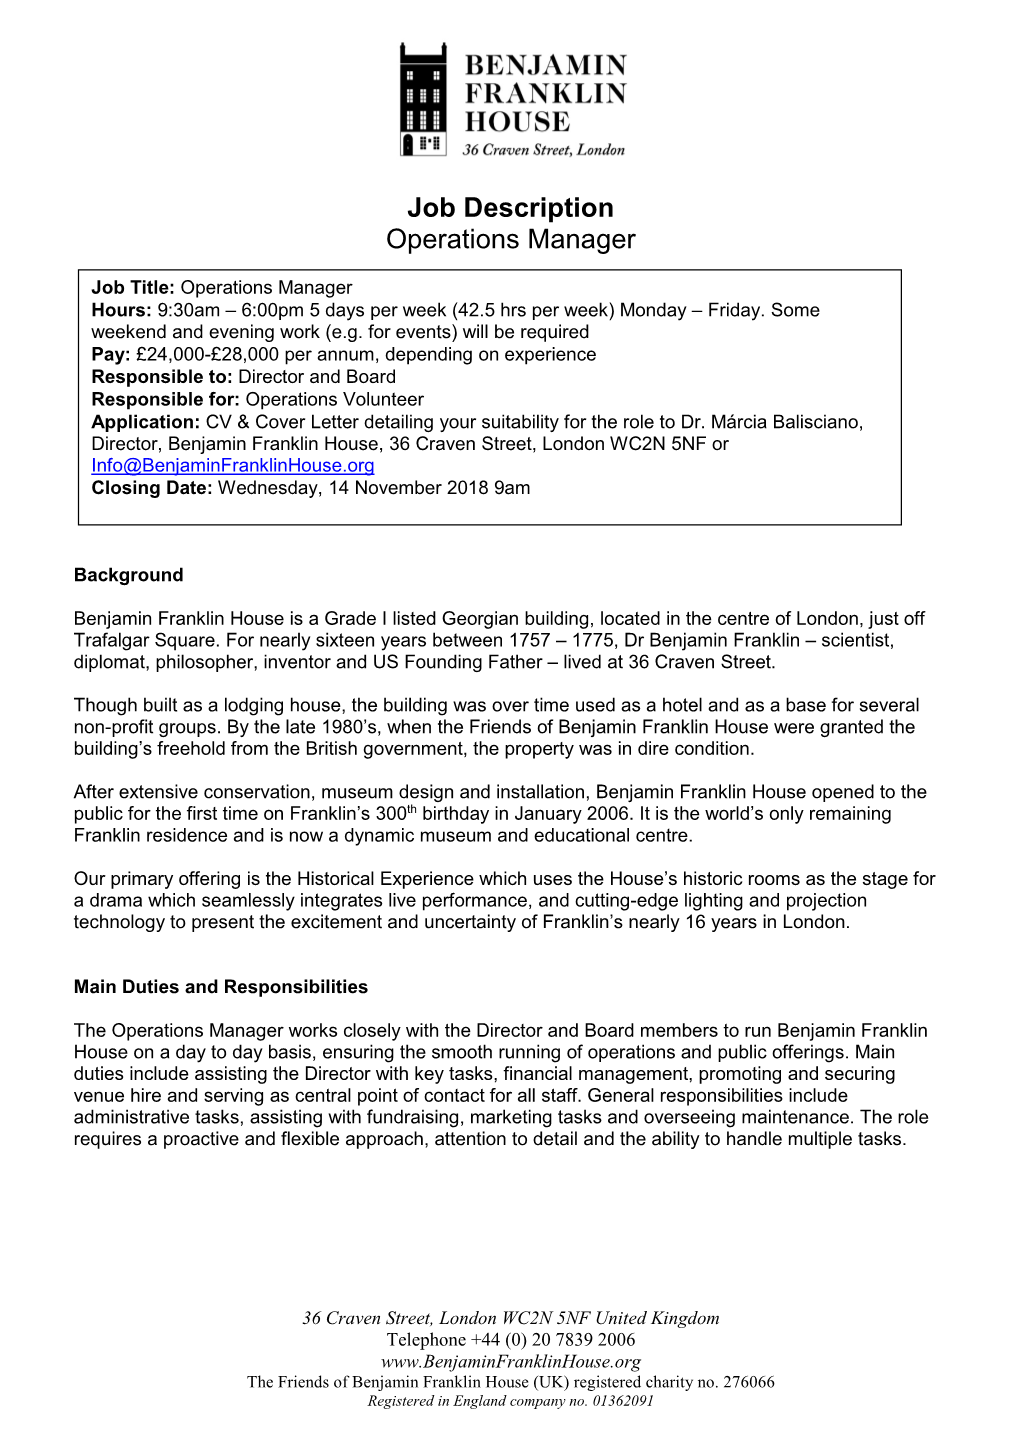 Operations Manager Role Description 2018